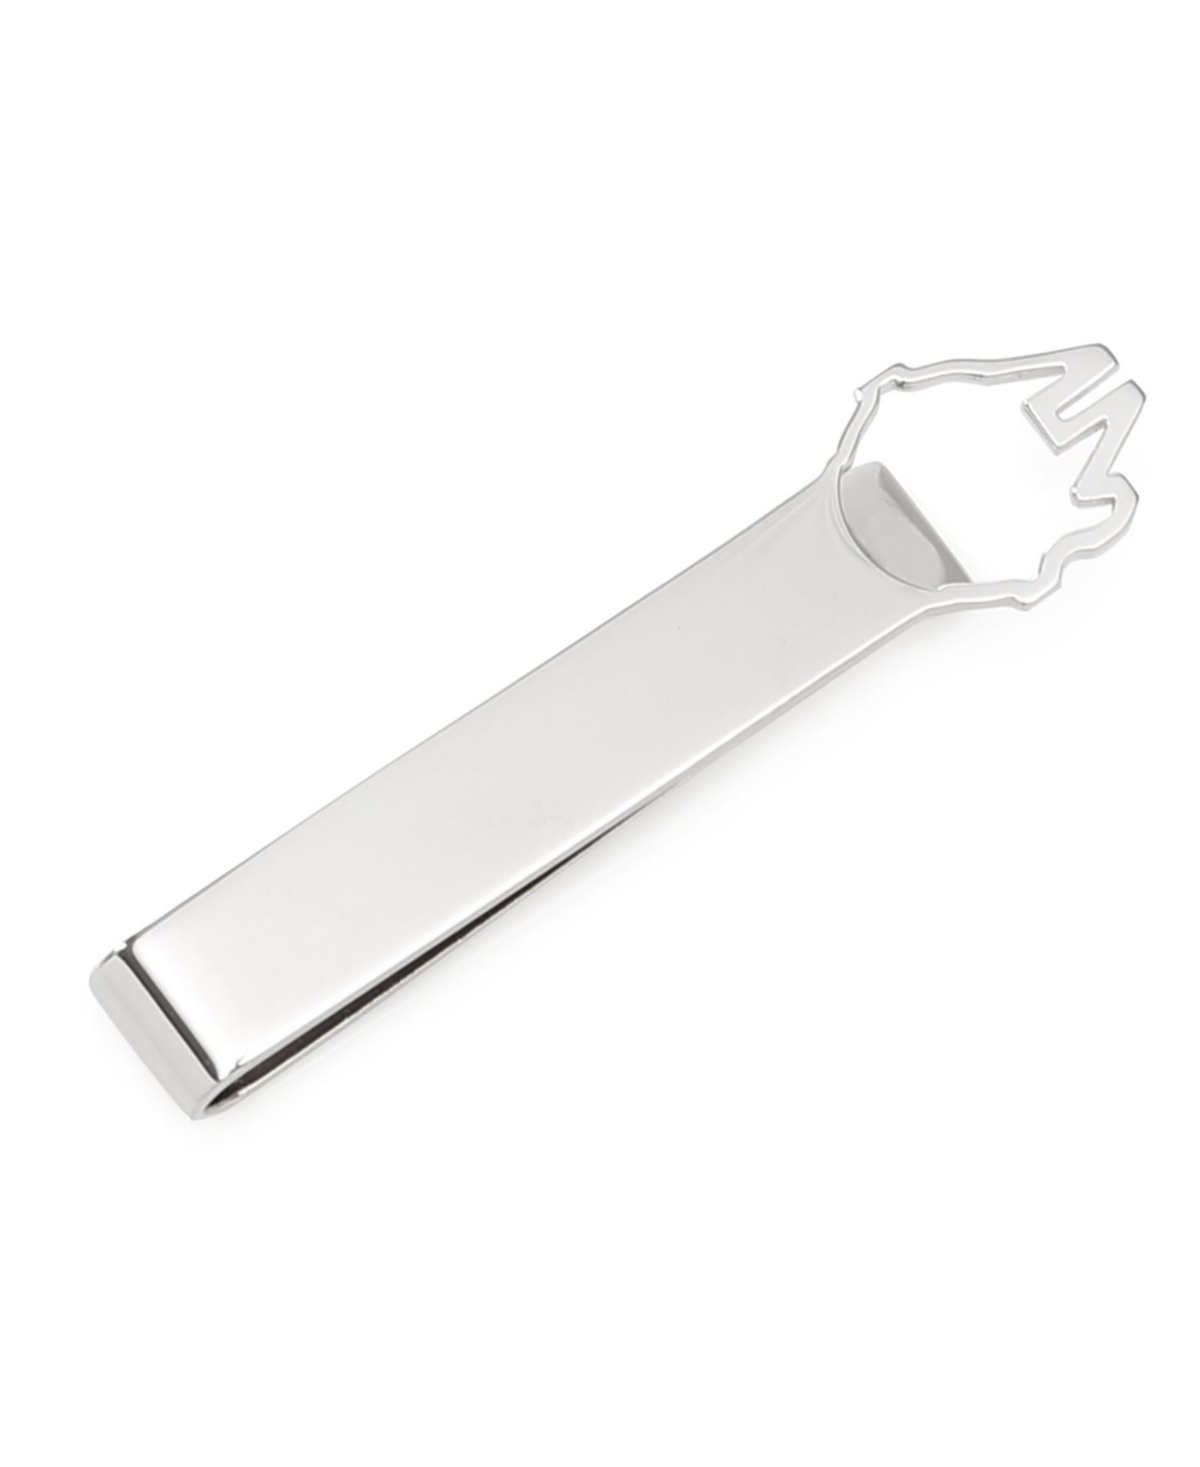 Millennium Falcon Sterling Cutout Tie Bar - Silver